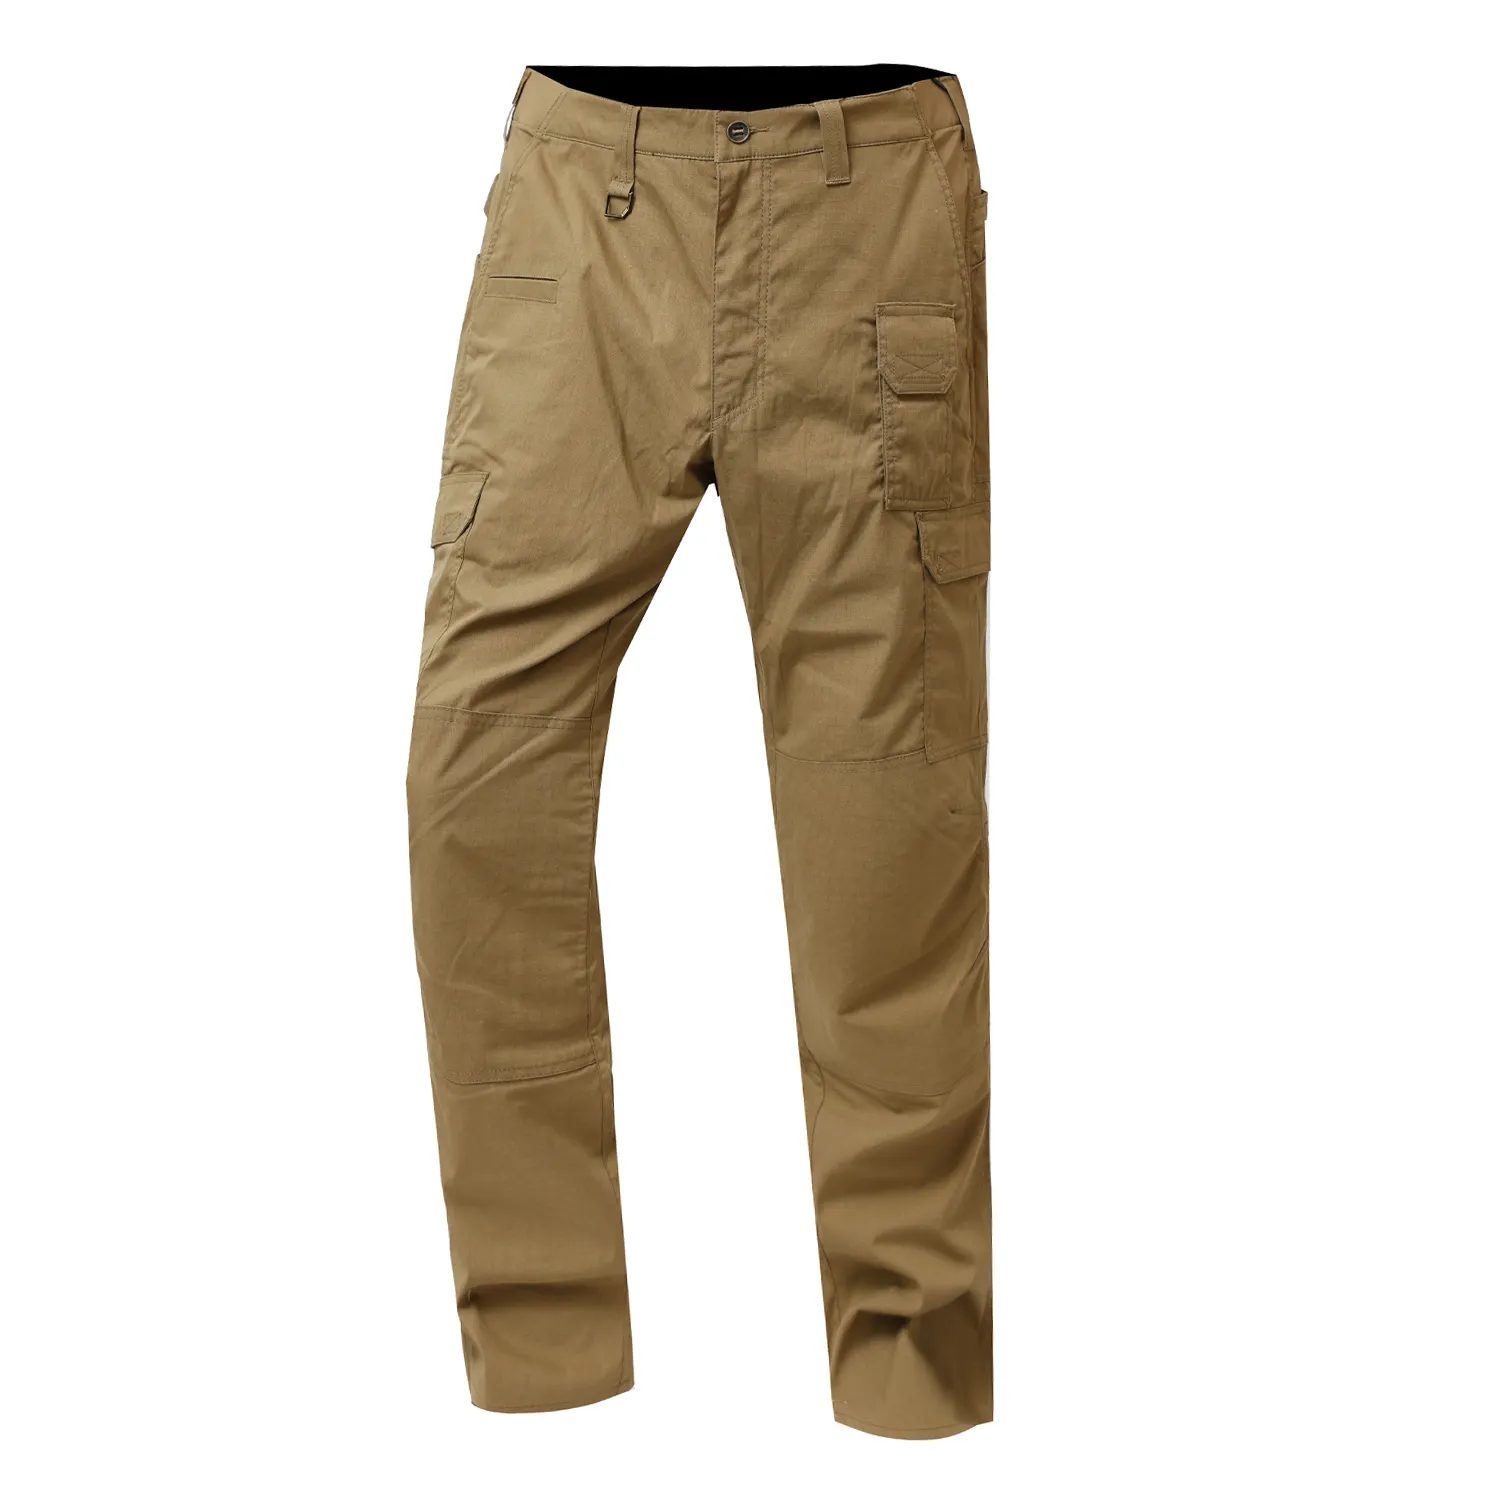 Men's Tactical Pants Water Resistant Rip stop Cargo Pants Lightweight Hiking Work Pants Outdoor Apparel